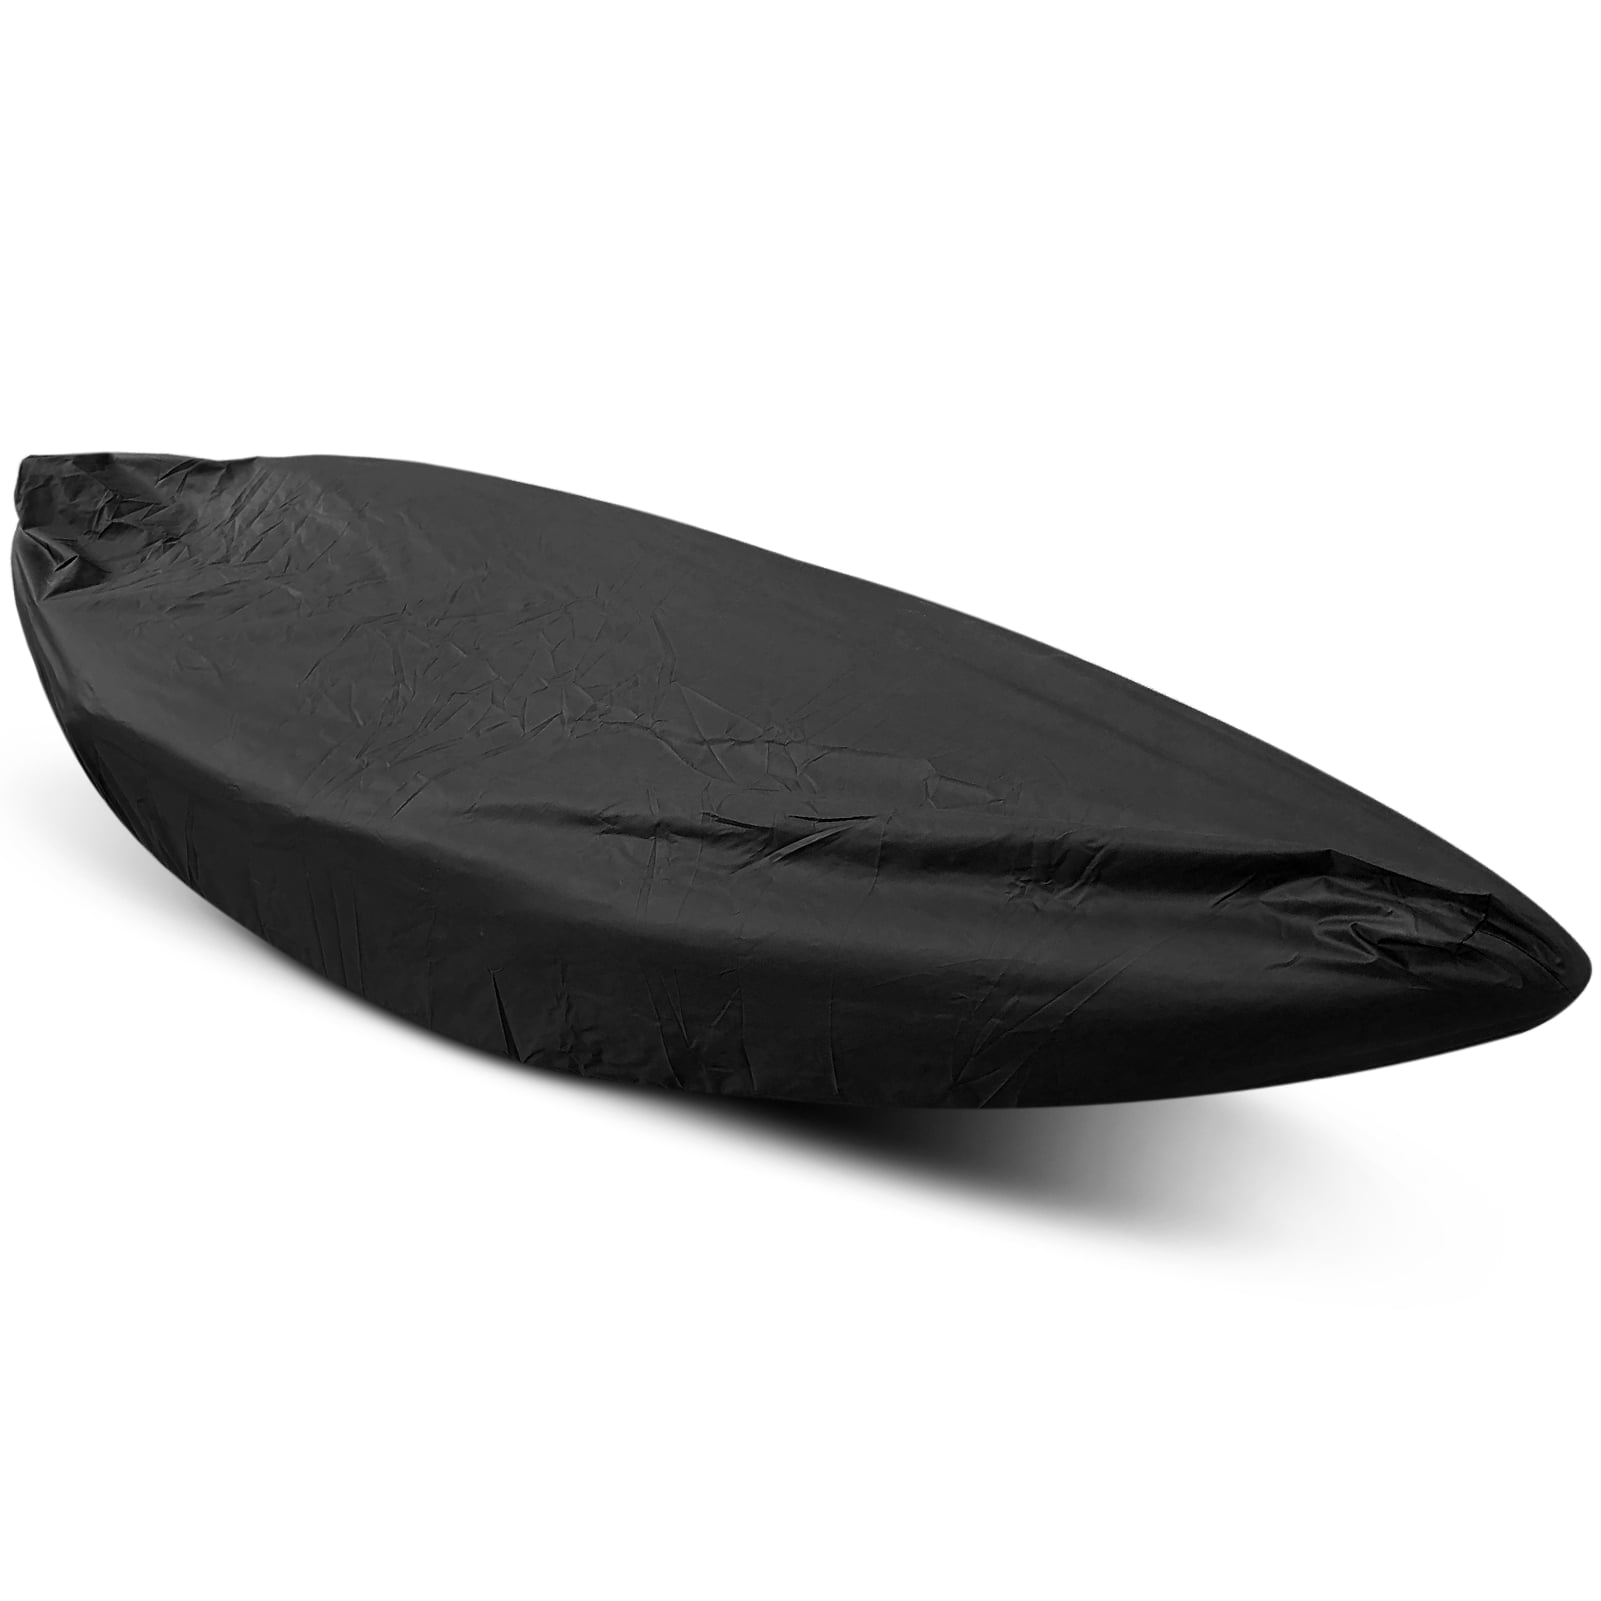 Walmeck Kayak Cover Professional Universal Canoe Boat Waterproof UV Resistant Dust Storage Cover Shield